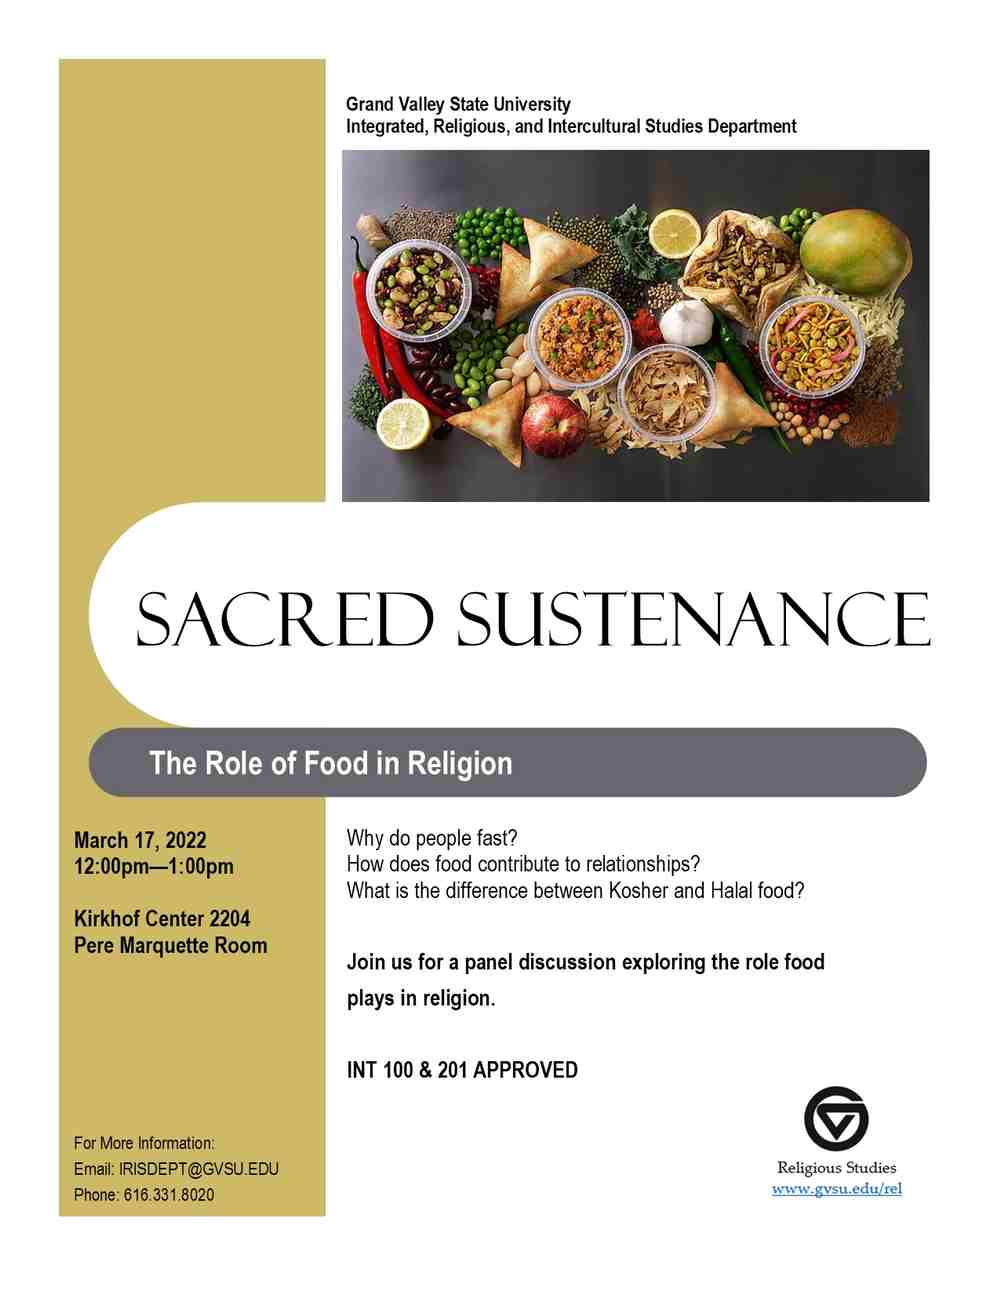 Sacred Sustenance Panel Discussion